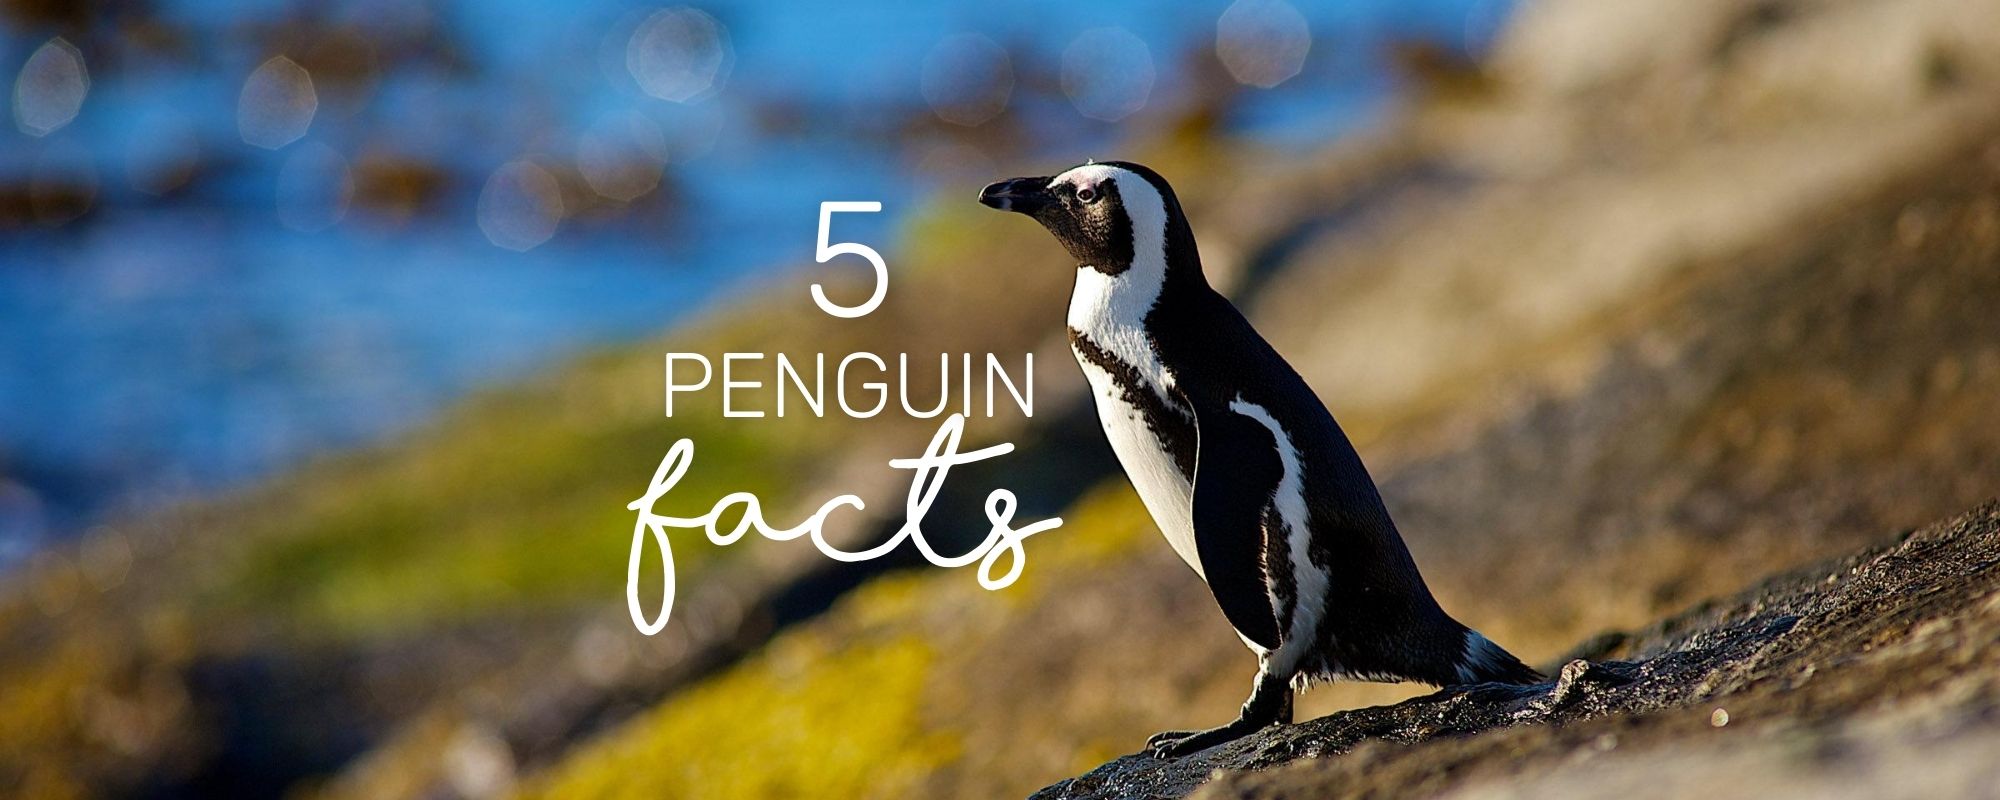 5 SURPRISING FACTS ABOUT PENGUINS